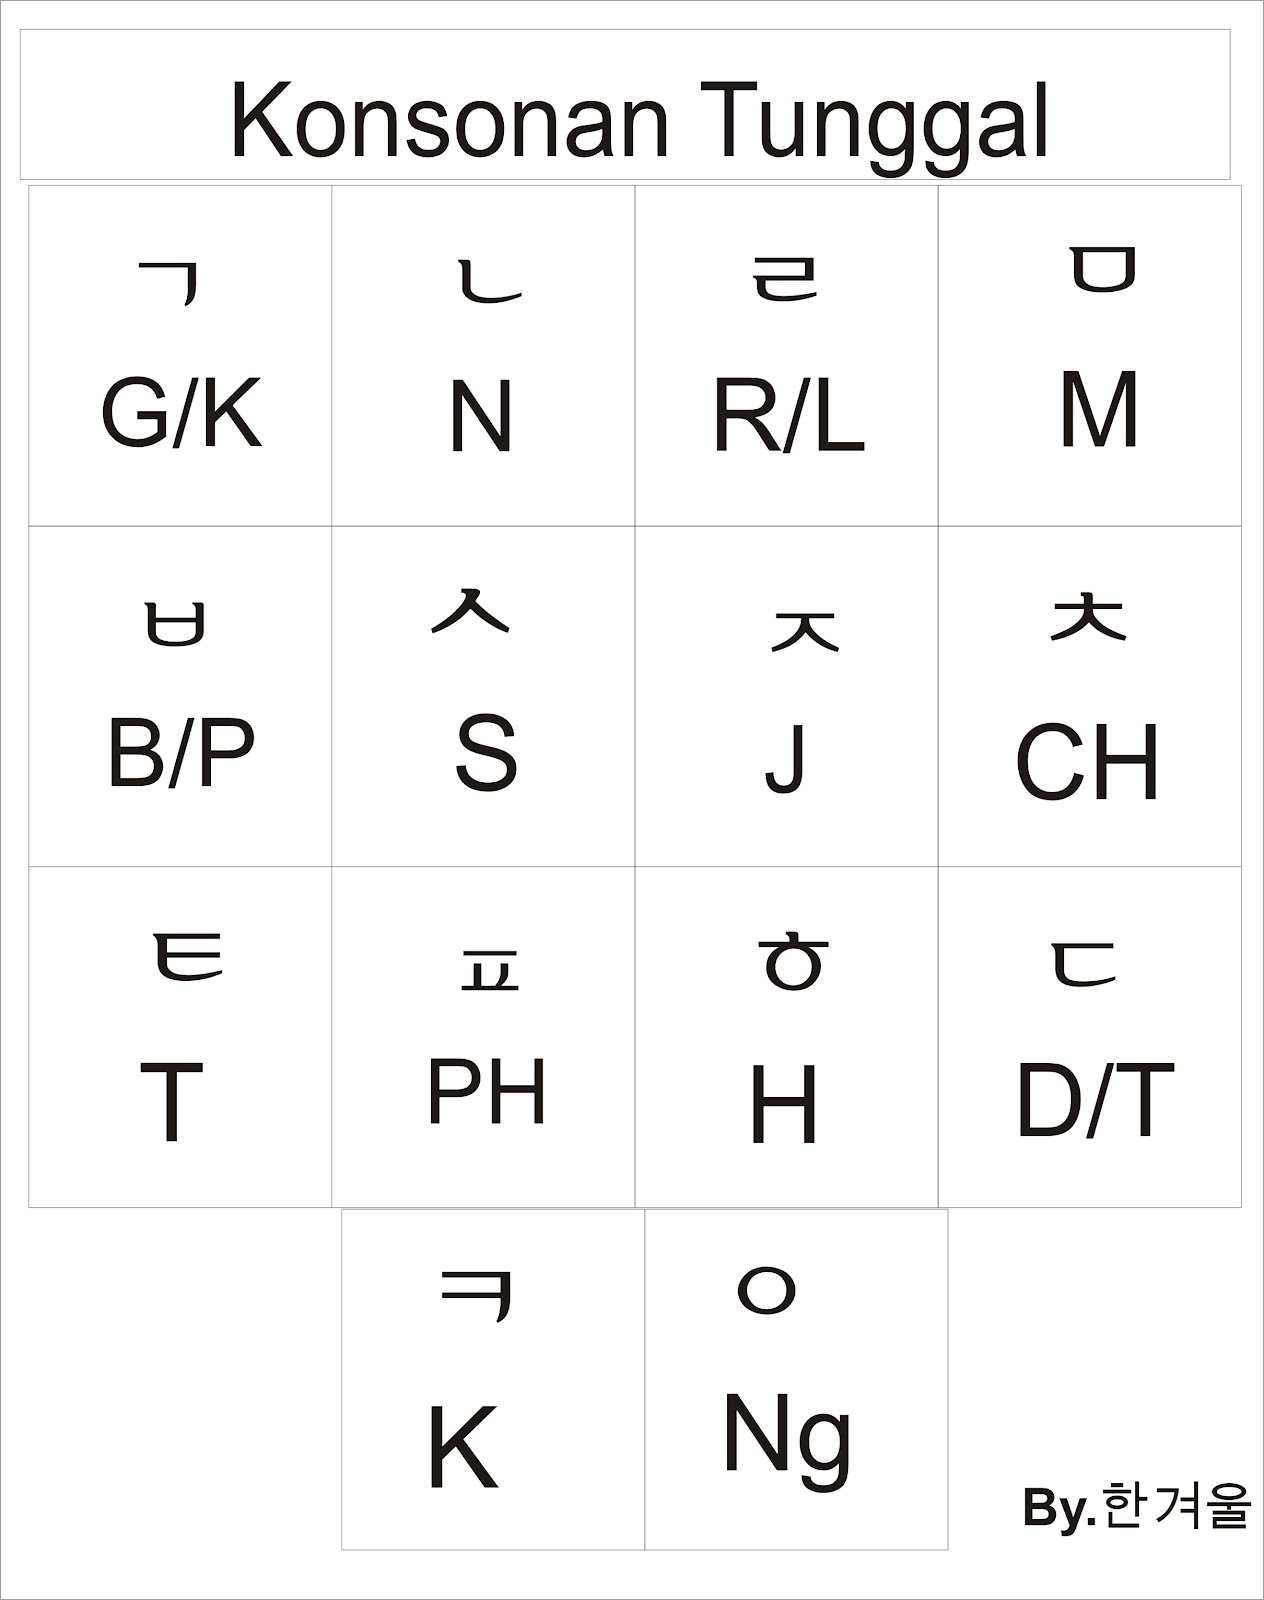 Contoh Lengkap Koleksi Huruf Korea Dalam Fitur Abjad Yang Keren